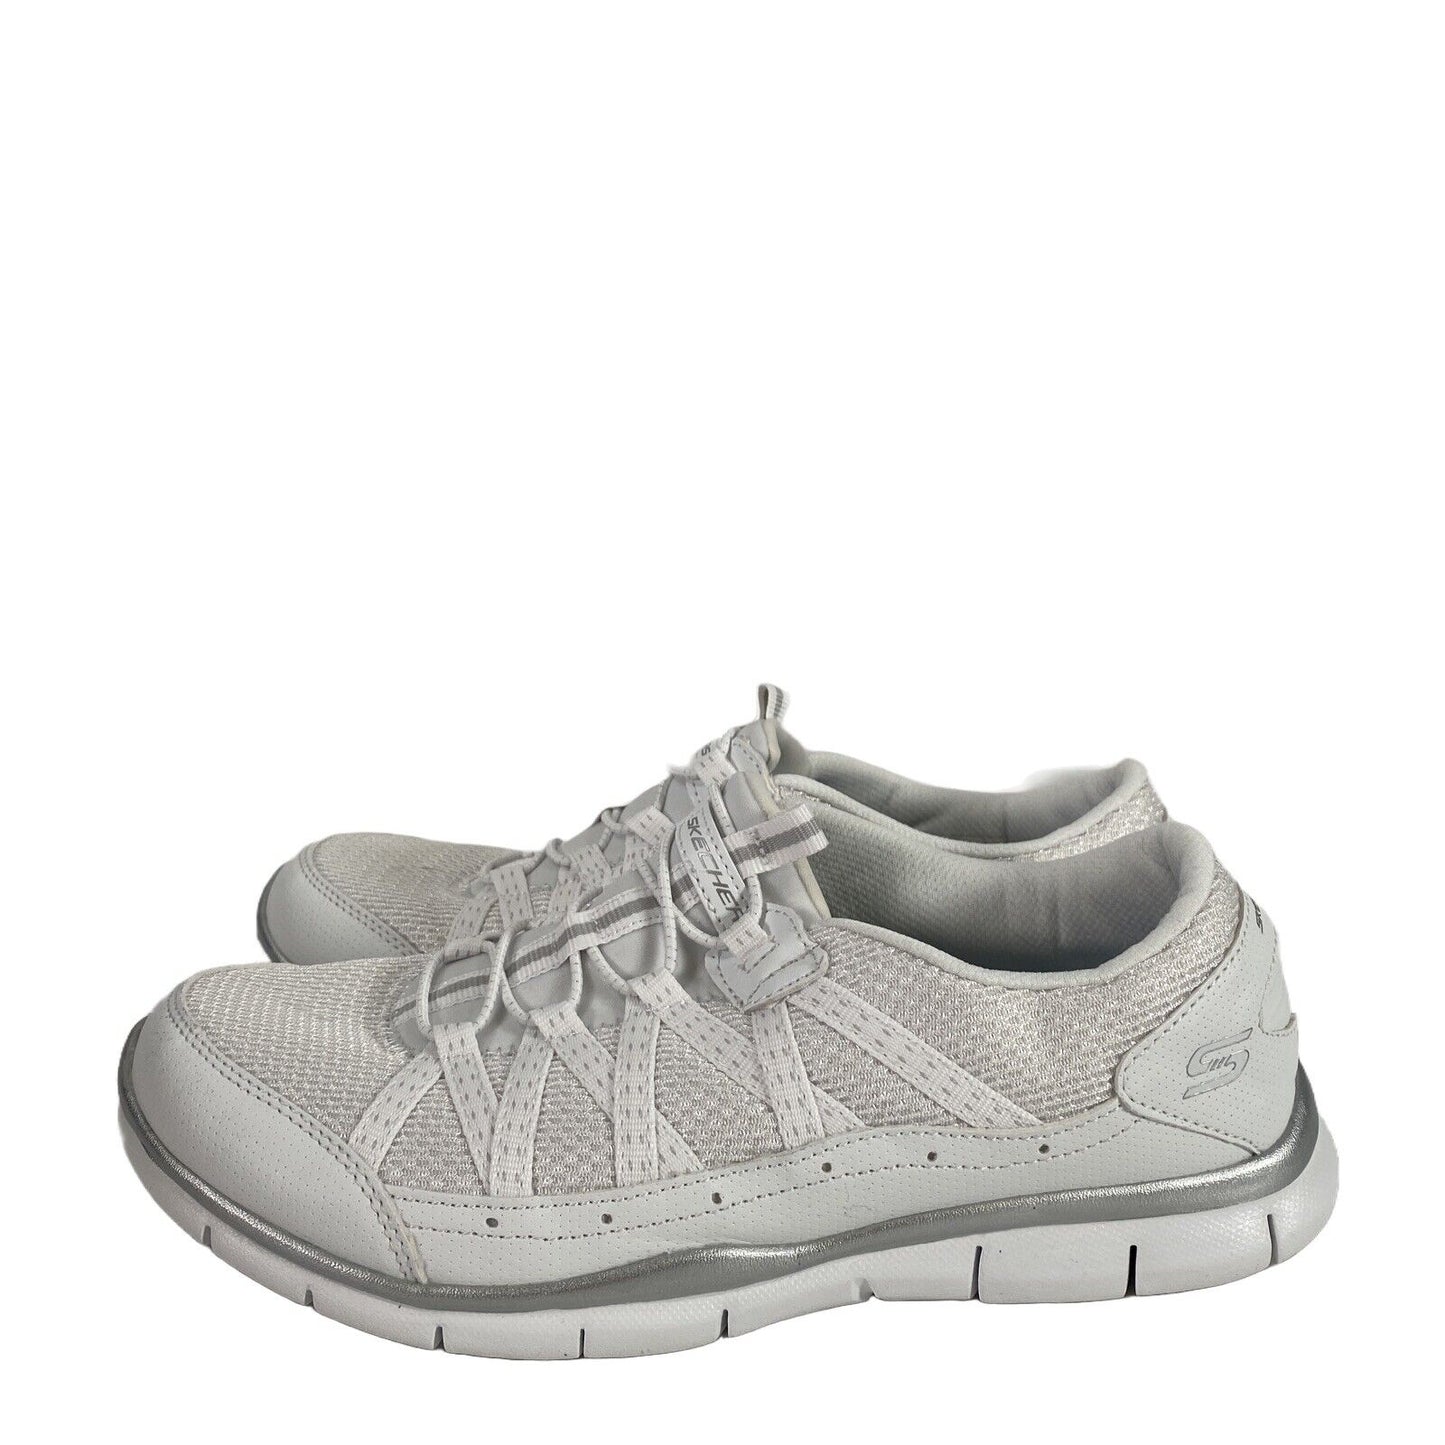 Skechers Women's White Air-Cooled Gratis Slip On Sneakers - 8.5